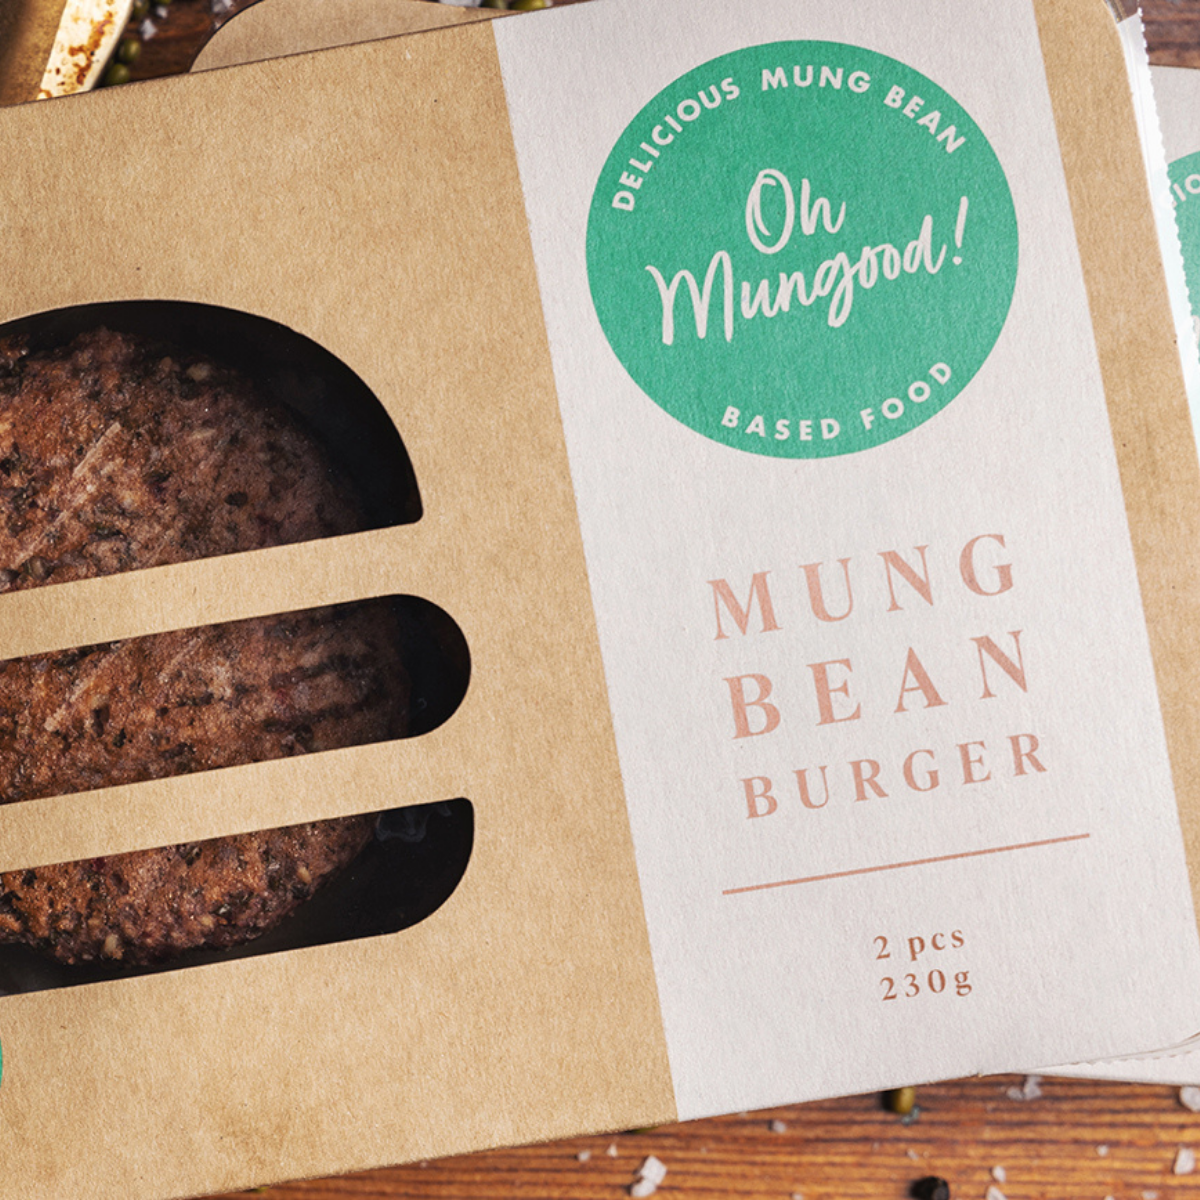 OMG Plantbased Food - Oh Mungood's Oh Mungoods mungburgare'